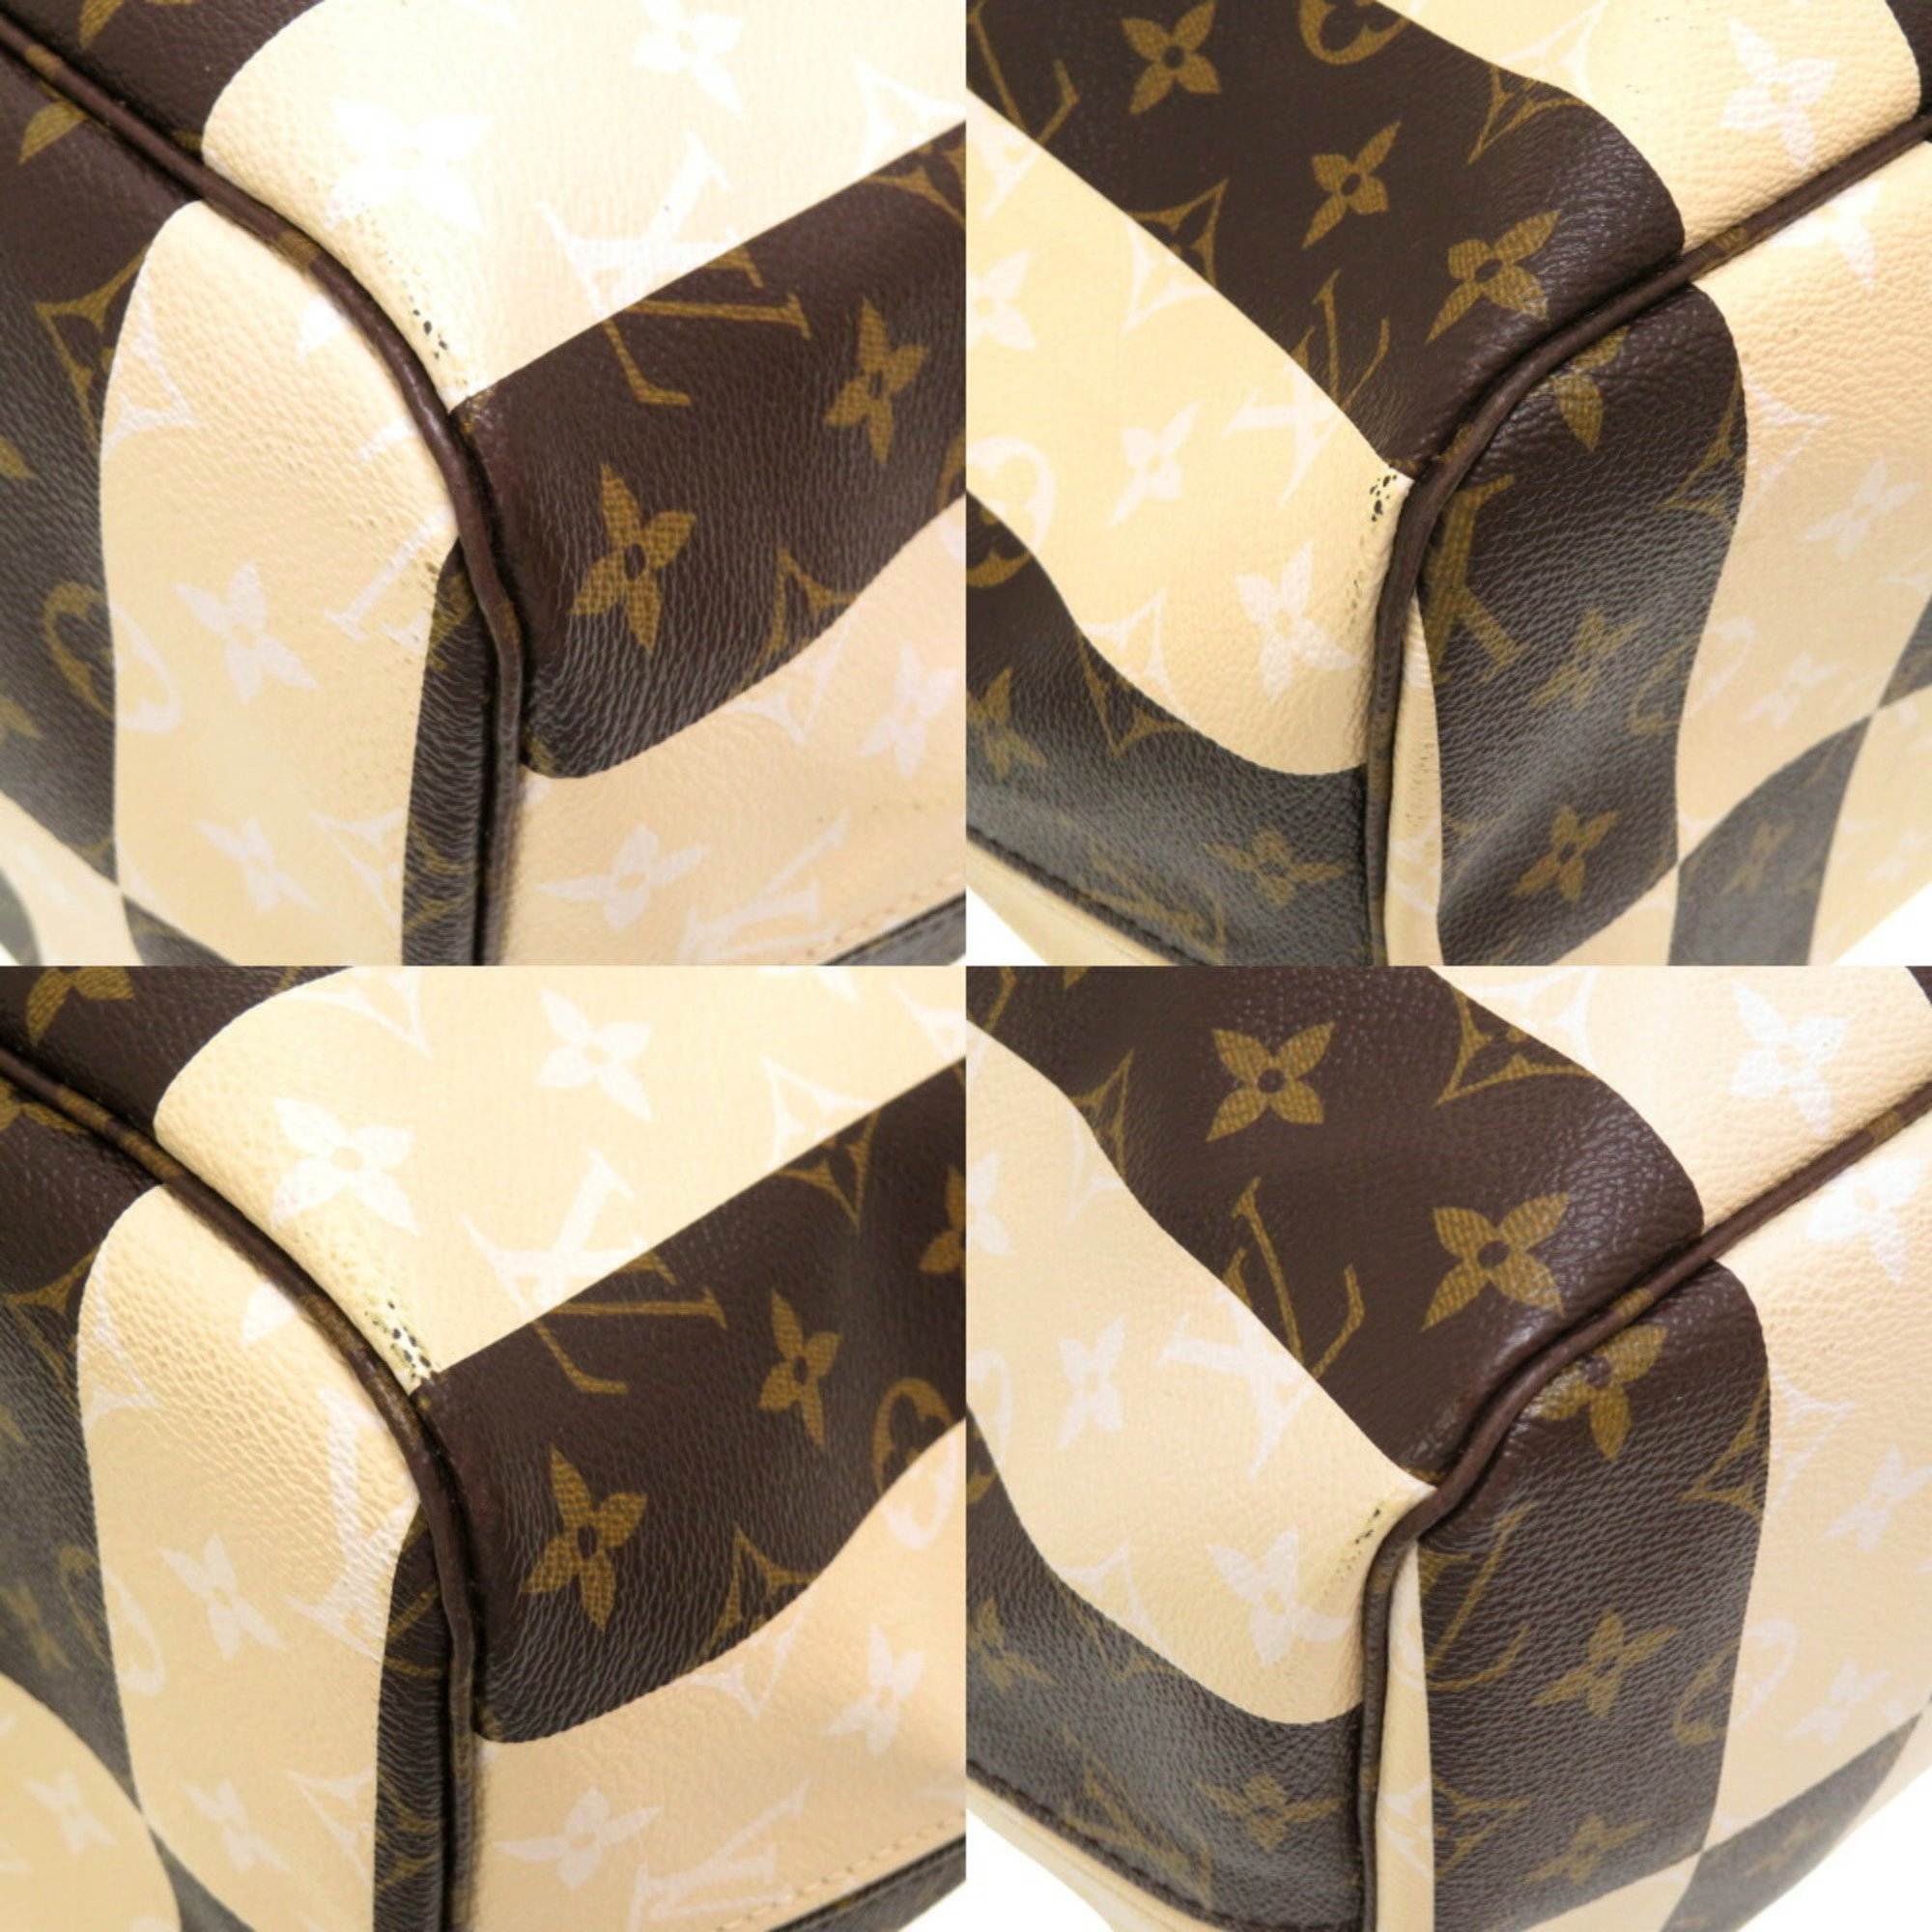 Louis Vuitton Monogram Rayleur Neverfull XL M40562 Tote Bag